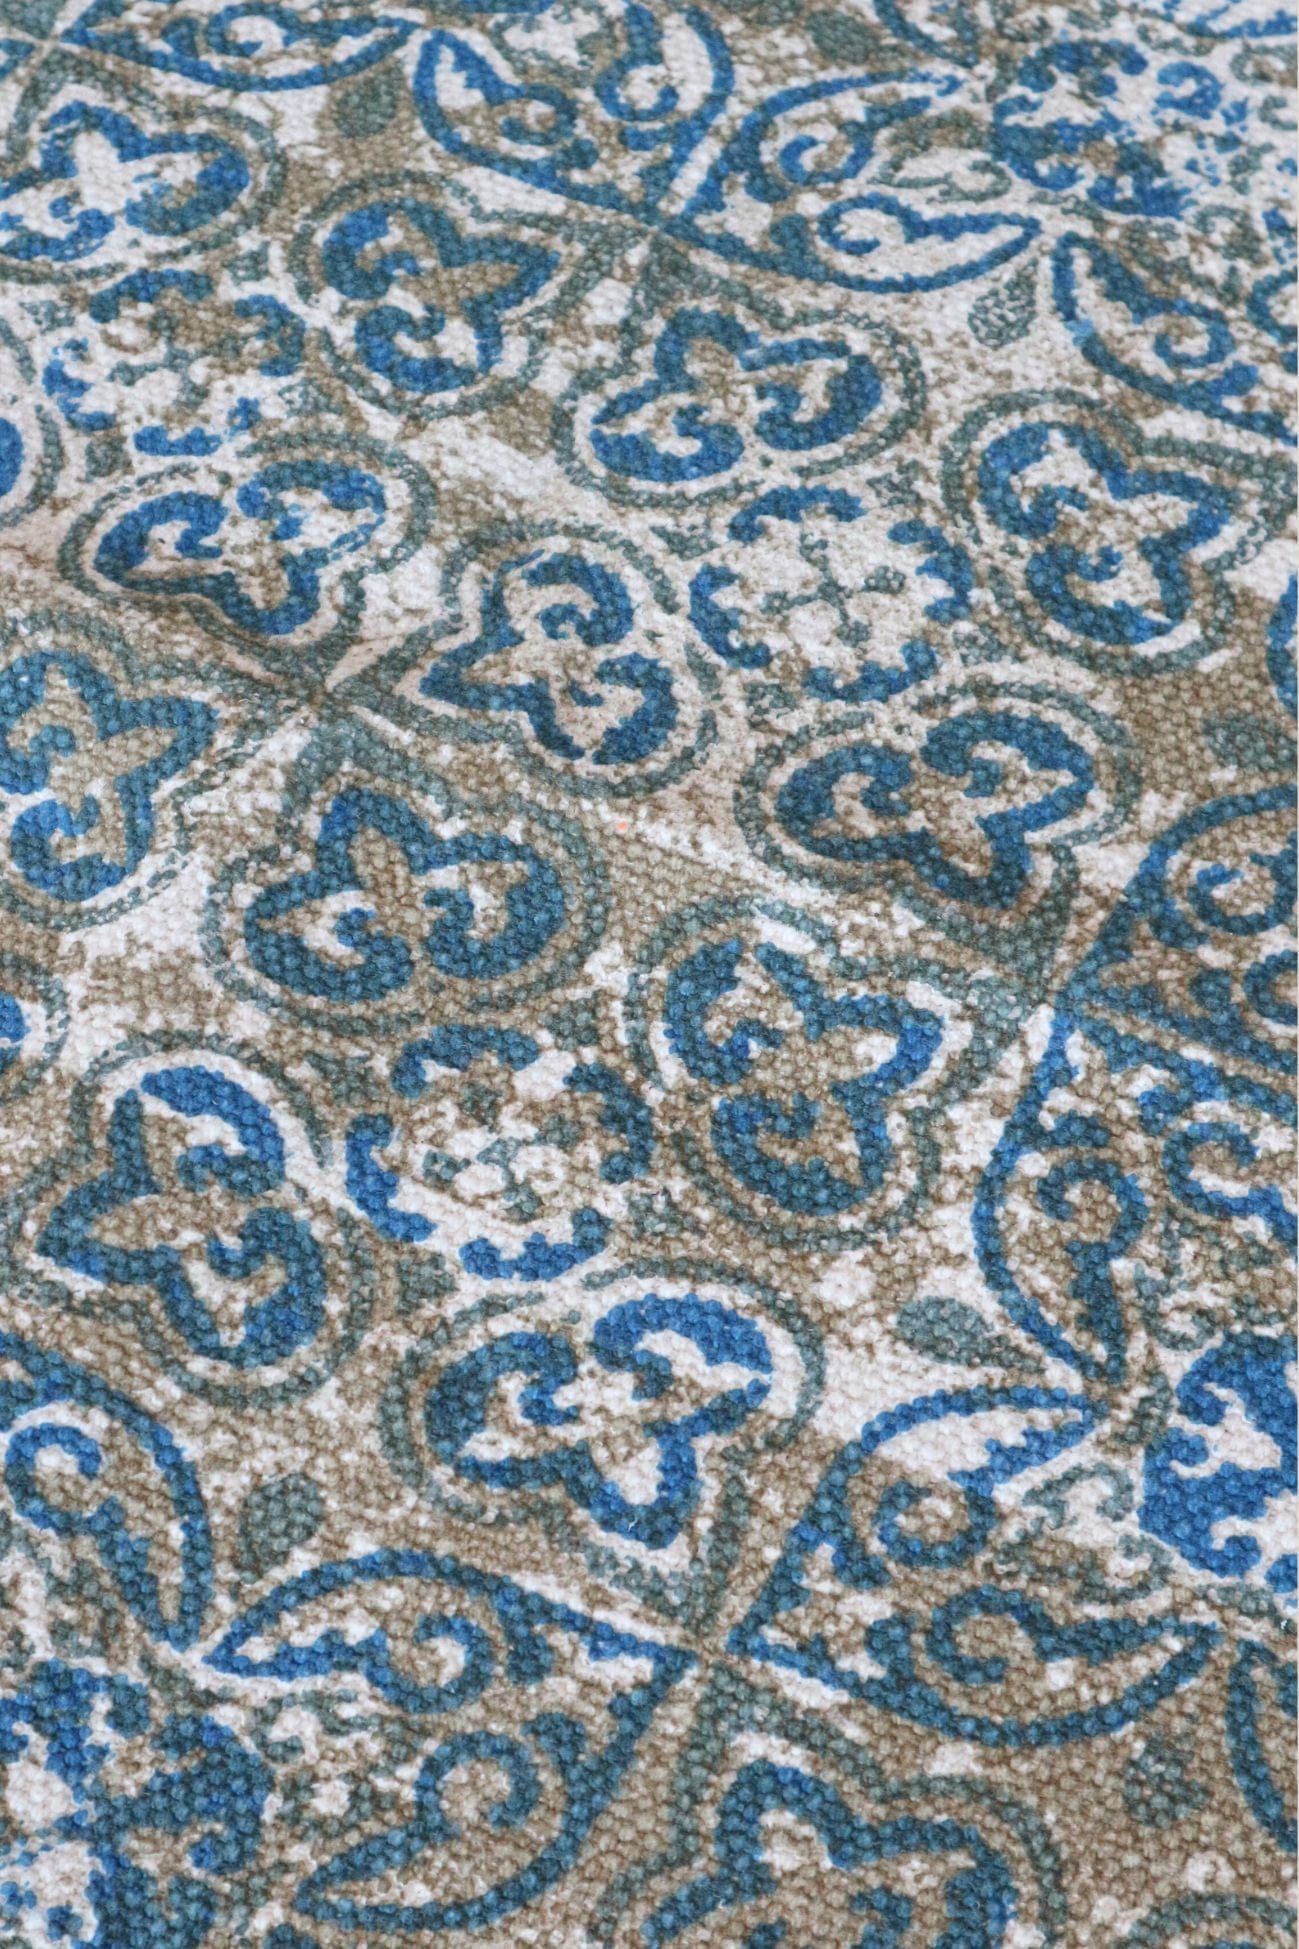 Item International Qanat Qanat - Tappeto in cotone anticato con azulei 120x180 | Item International